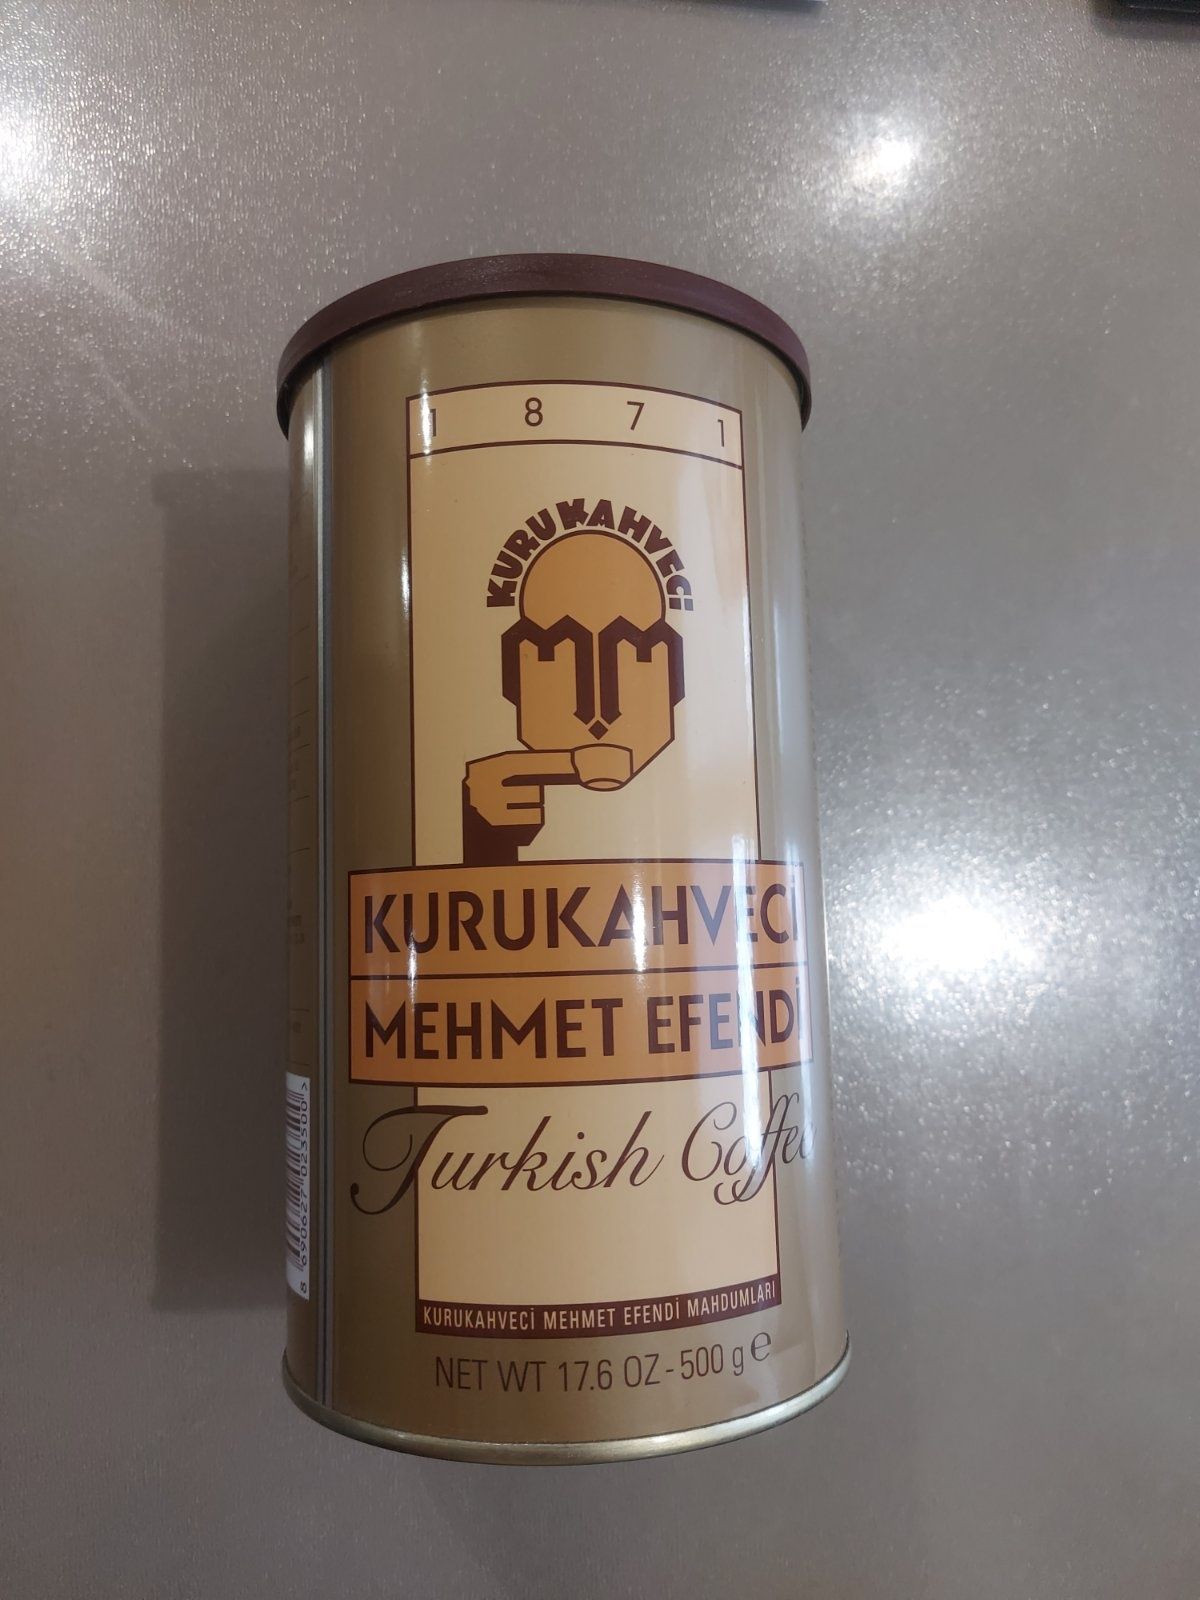 Турецька кава Mehmet Efendi